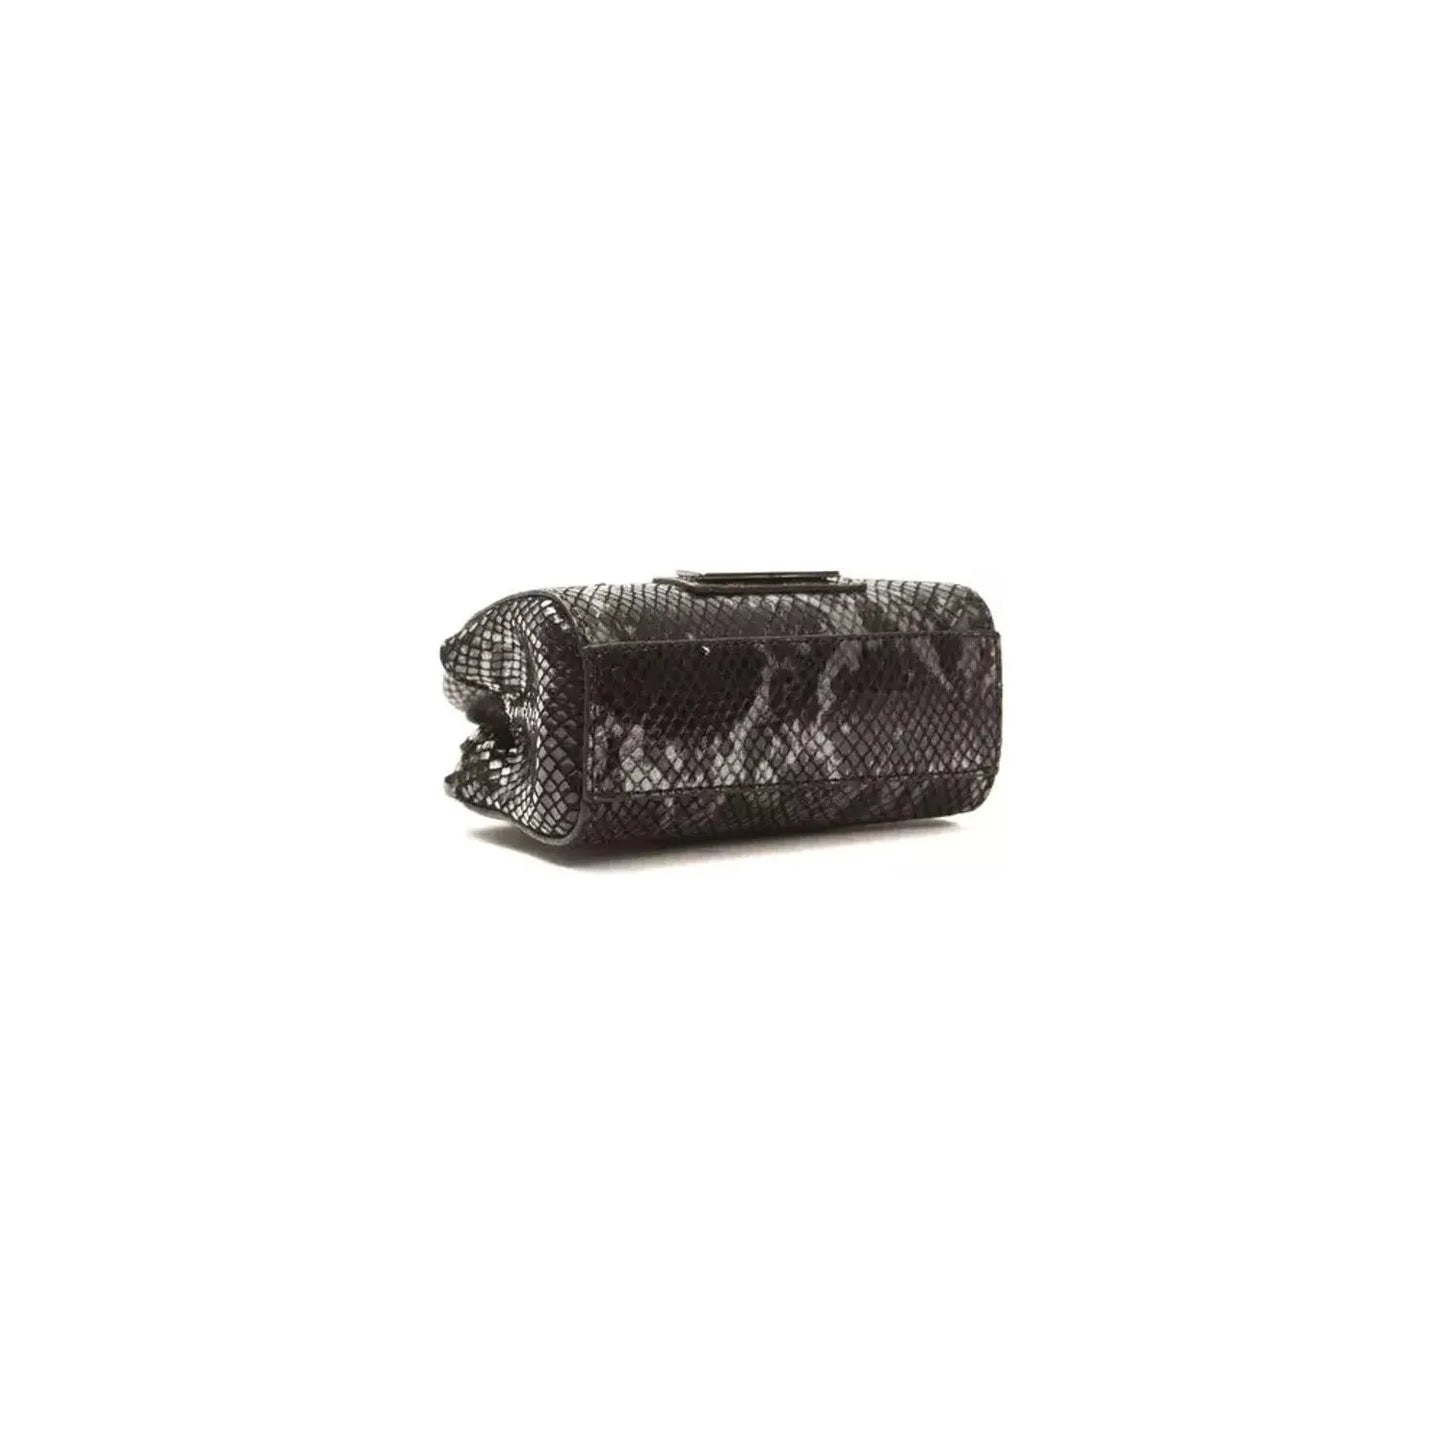 Pompei Donatella Elegant Leather Mini Tote with Python Print grigio-grey-handbag-3 Handbag stock_product_image_5783_343197283-26-f0bc2502-441.webp